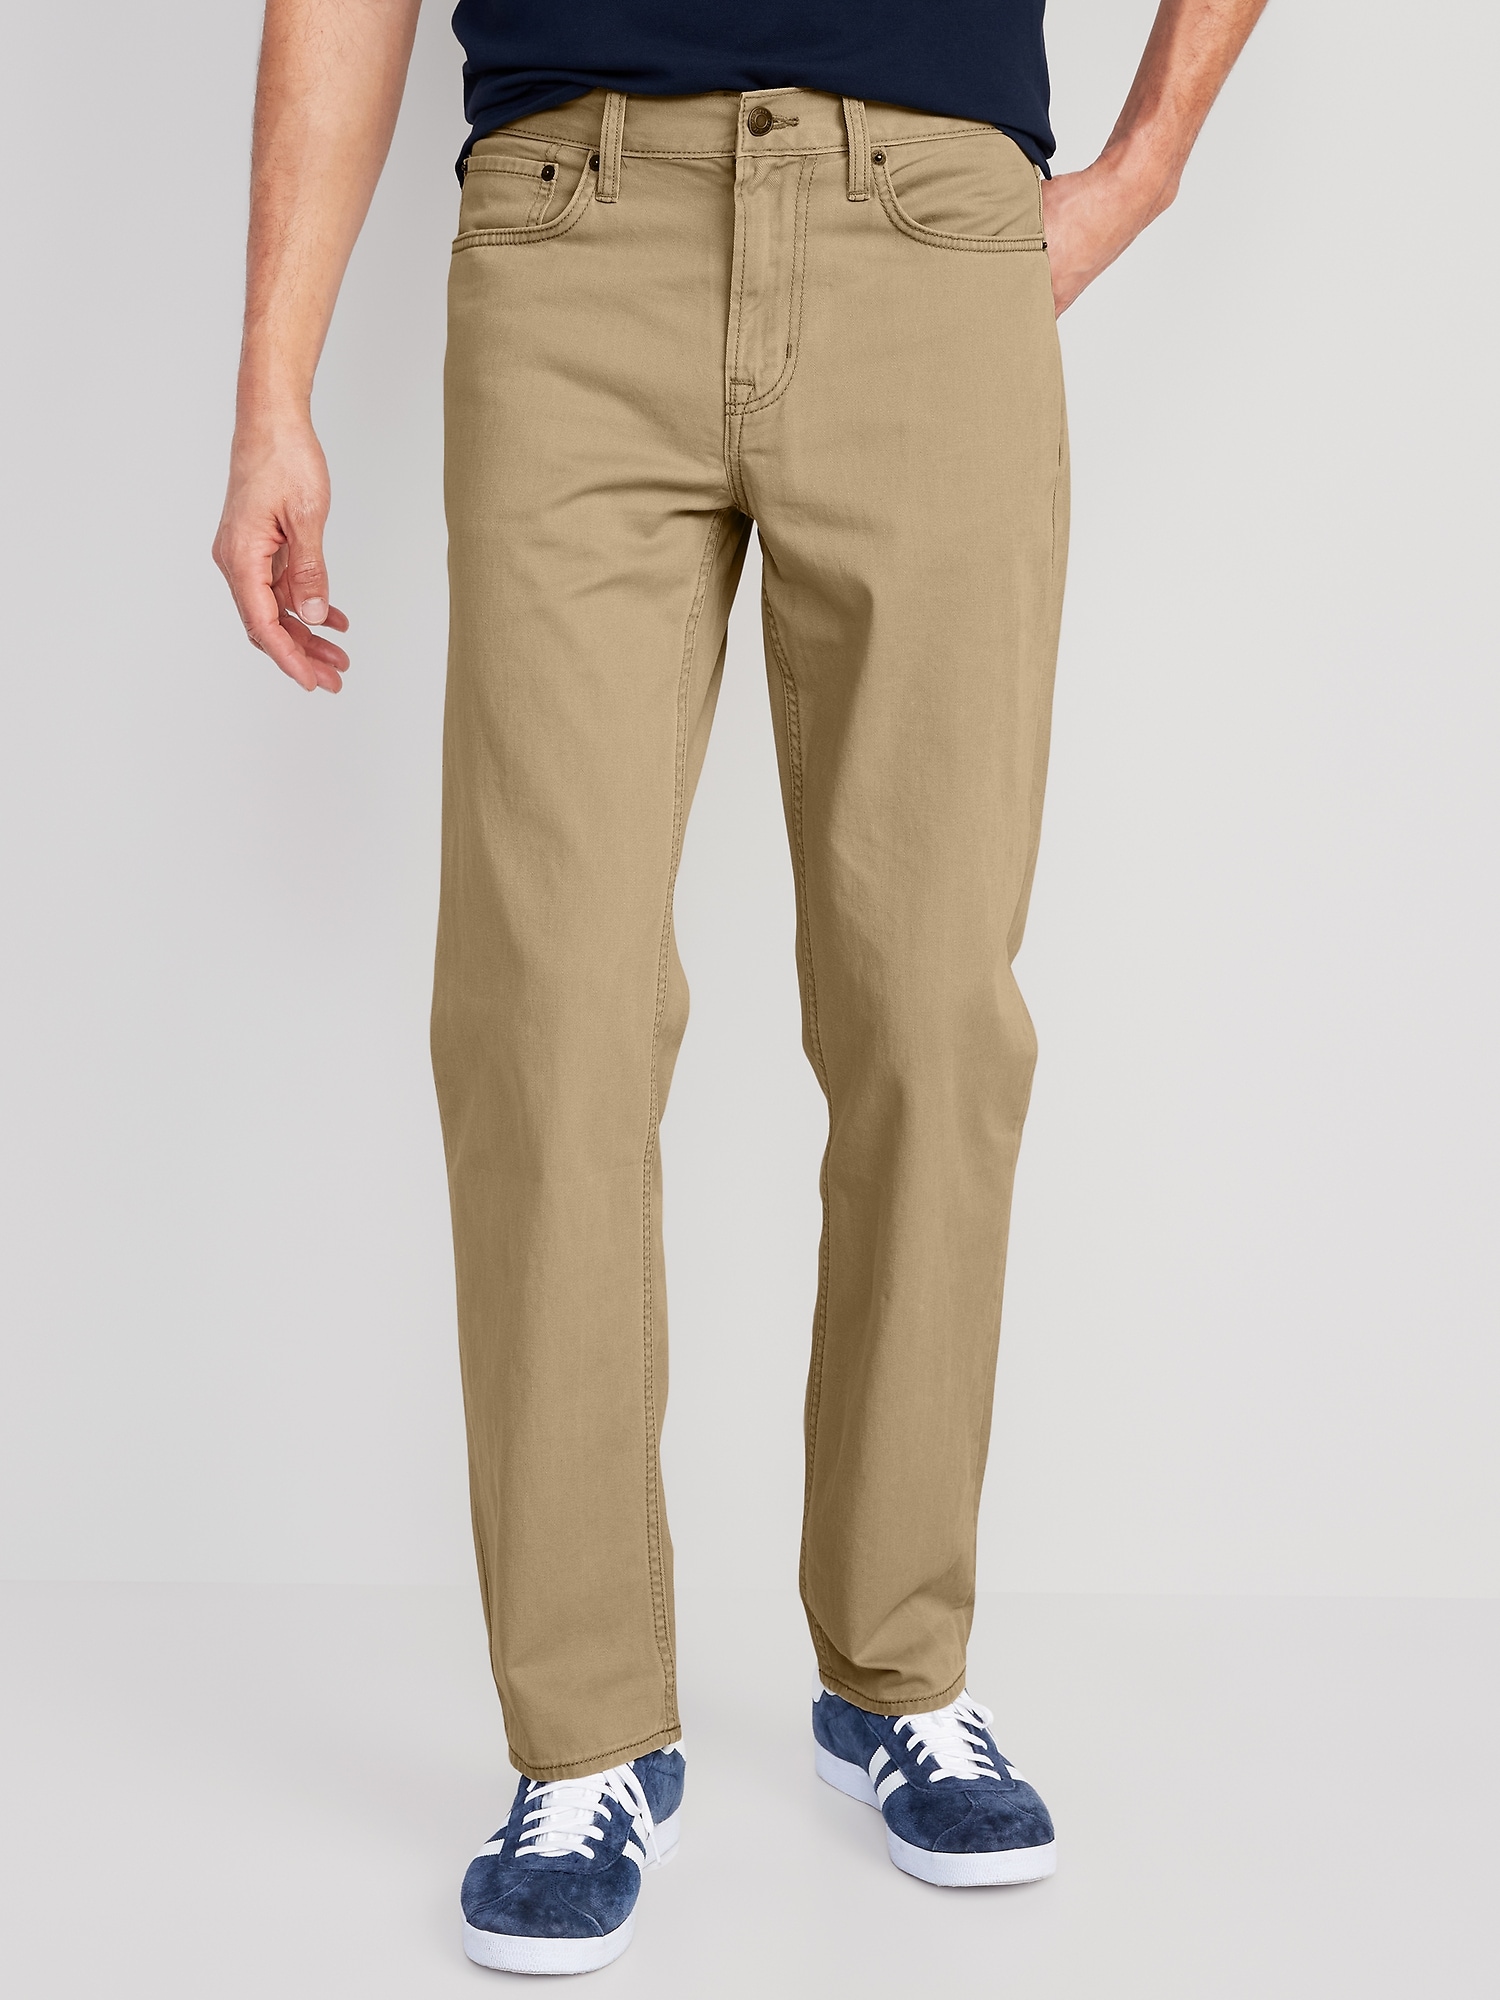 Gap men’s 38X32 five pocket pants stretch twill classic style slim fit￼